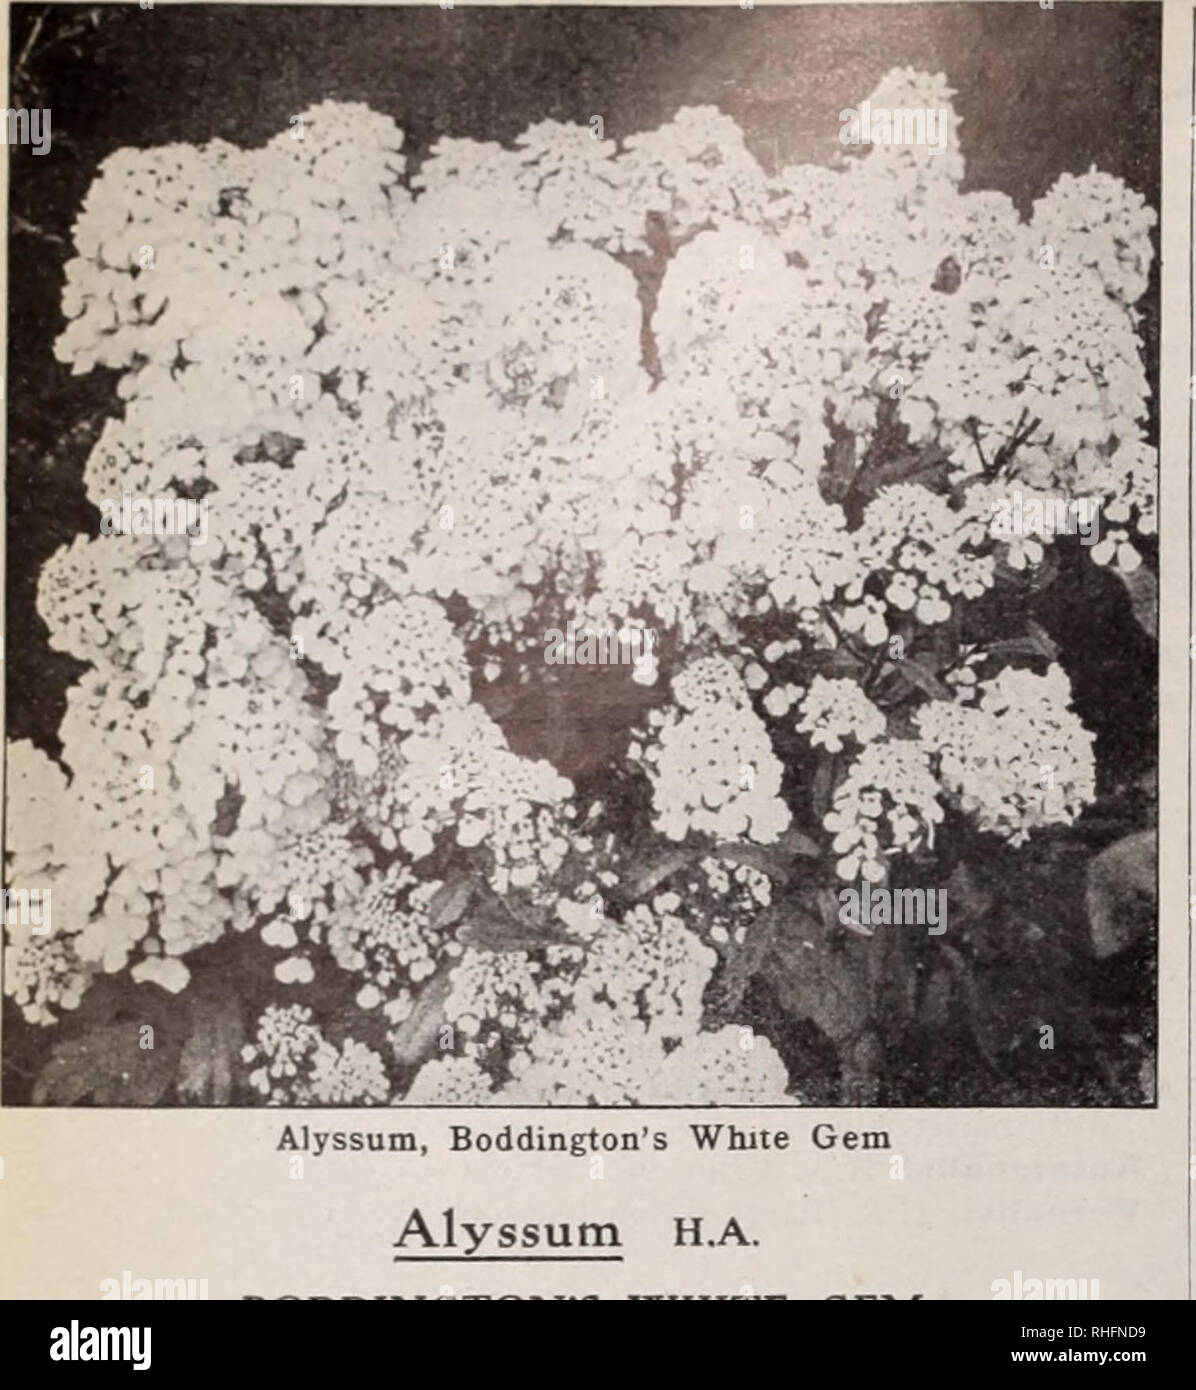 . Boddington's quality bulbs, seeds and plants / Arthur T. Boddington.. Nursery Catalogue. 10 Arthur T.Boddington. 342 West 14th St., New Vork City. Alyssutn H.A. BODDINGTON'S WHITE GEM A ernnri improvement on Little Gem. being much more compact; grand for carpet-bedding. Pkt. 25 cts., oz. fi.50. Benthami (Sweet Alyssum). Fragrant white flowers.. Pkt. Oz. Klb. $i..$0 05 $030 Maritimam, Little Gem. Pretty trailer 10 50 *' procumbens. Carpet of Snow 10 50 Argenteum. H.P. i ft. Yellow. June 10 60 SazatUe. H P. i ft. Bright yellow. June 10 60 compactum (Basket of Gold), i ft. Yellow. June 15 60 AL Stock Photo